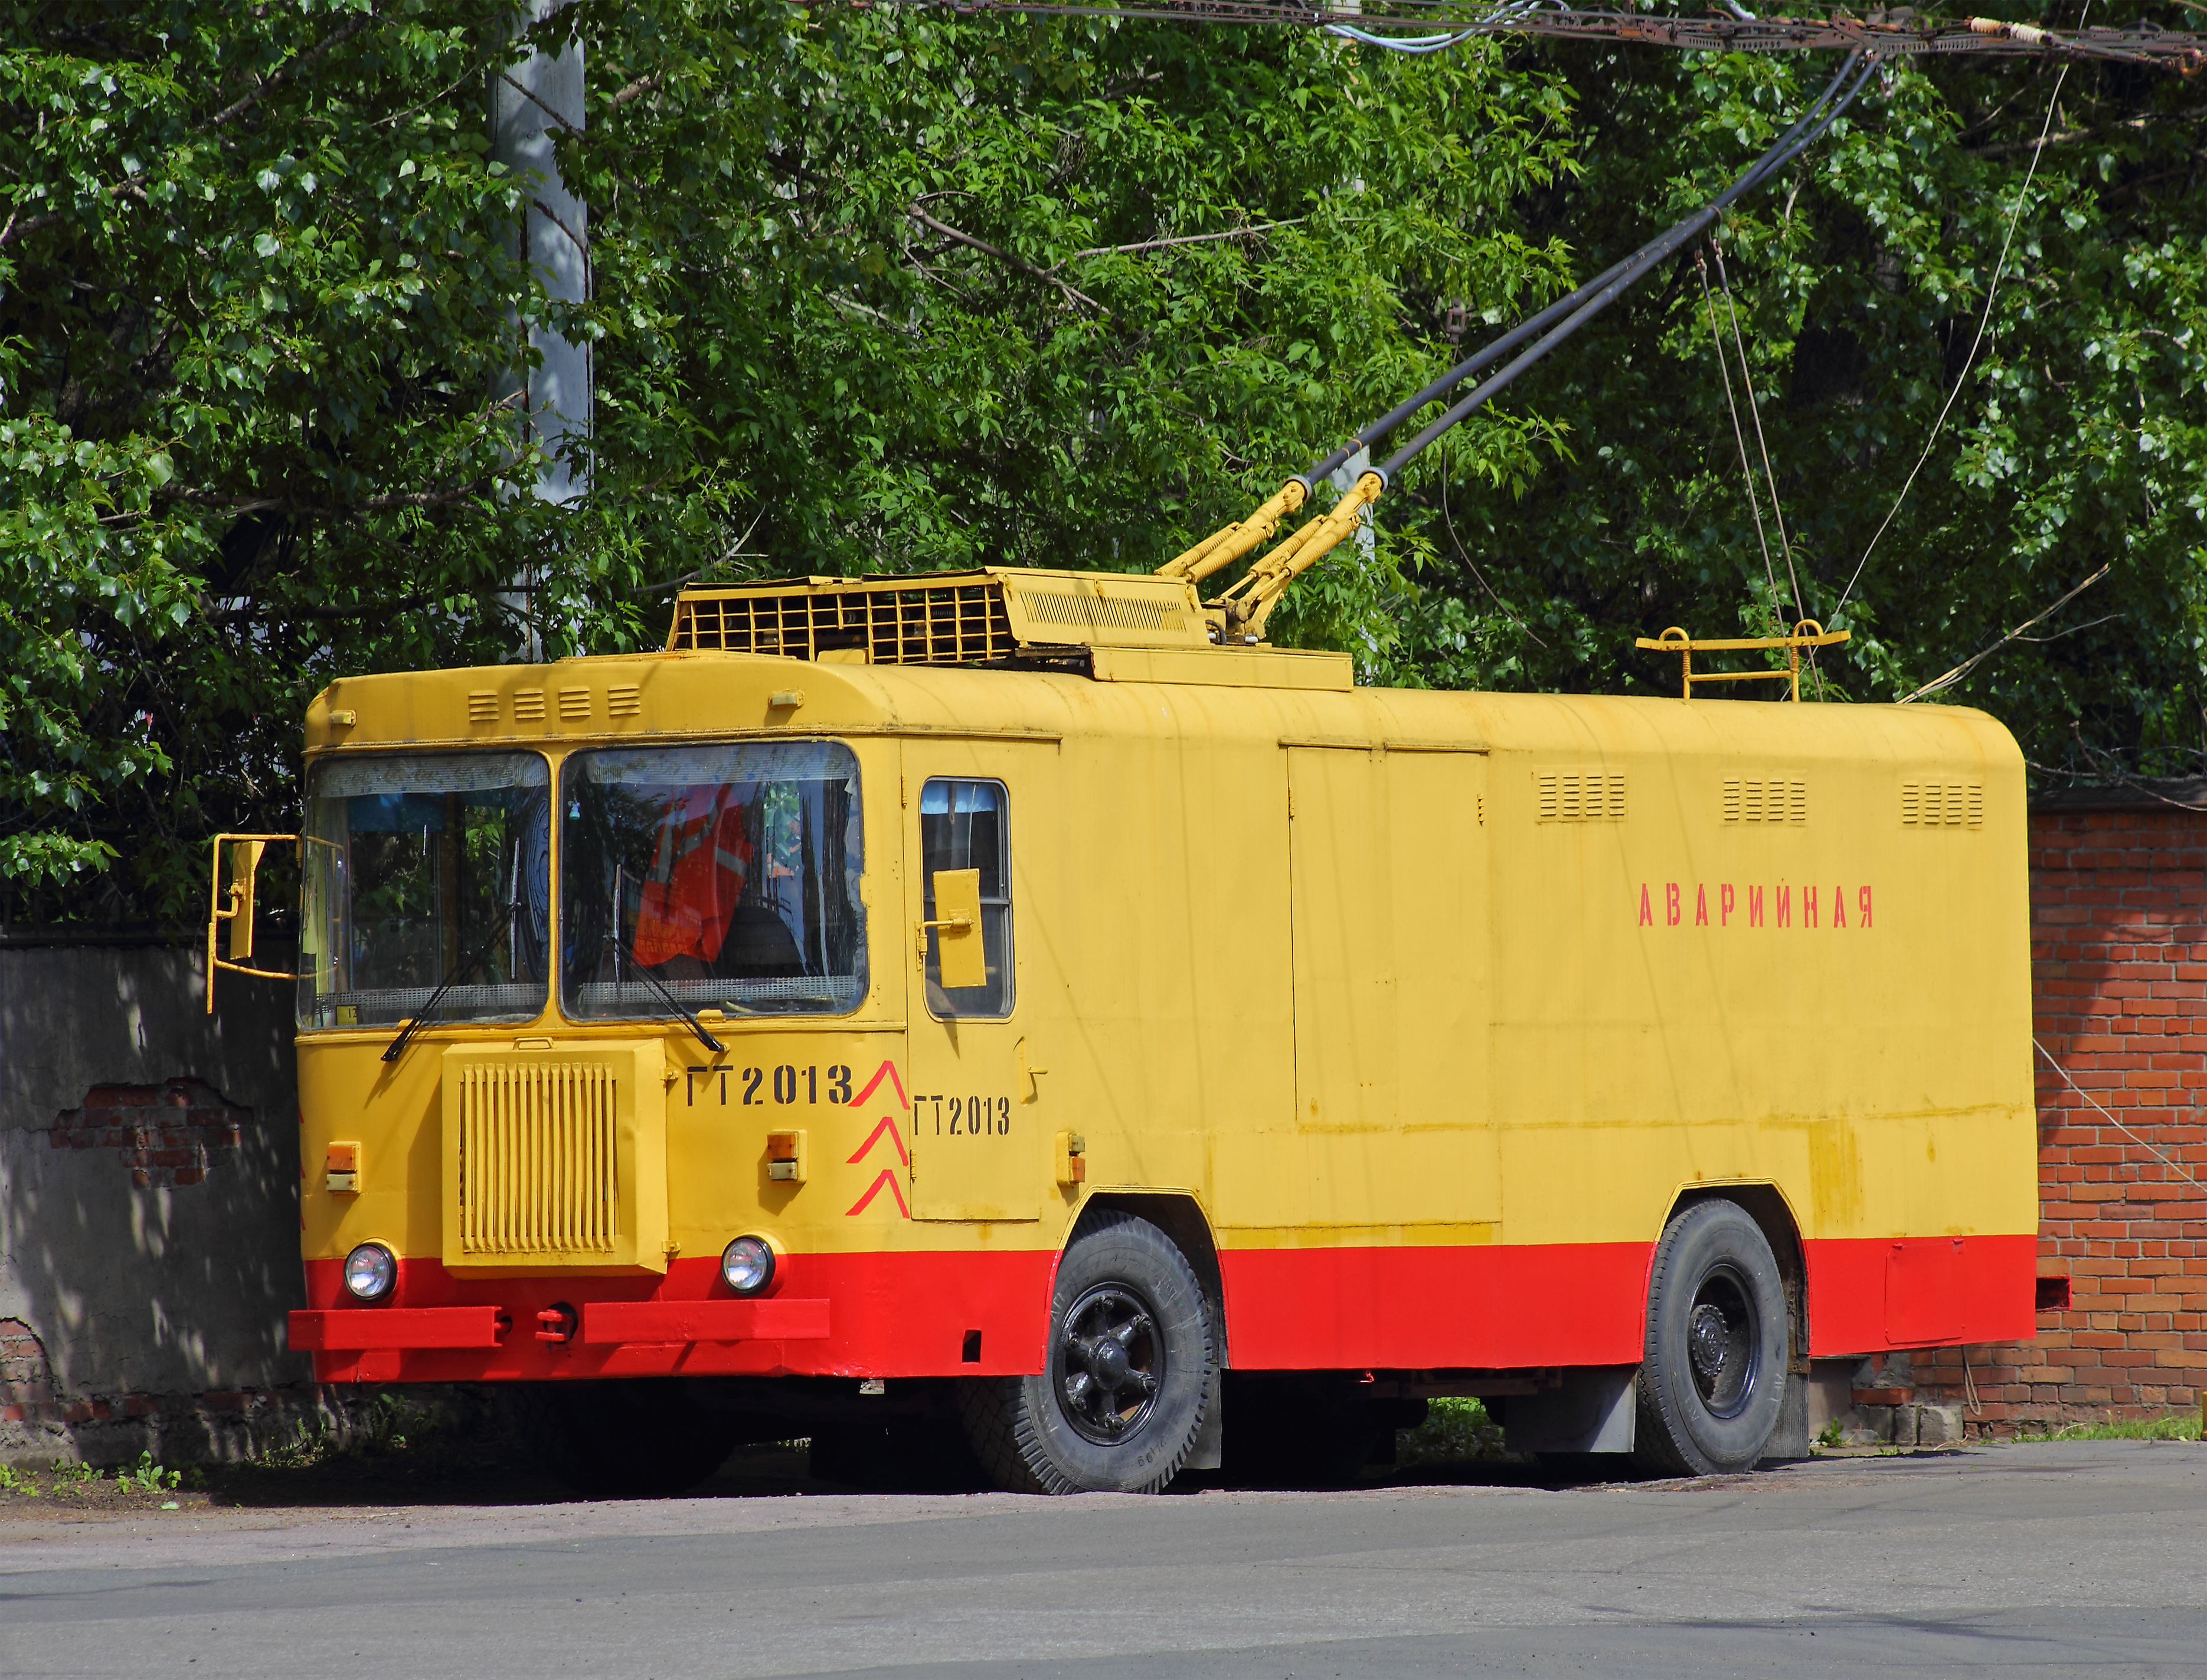 Spb Freight trolley in 2nd depot at Arsenalnaya Street